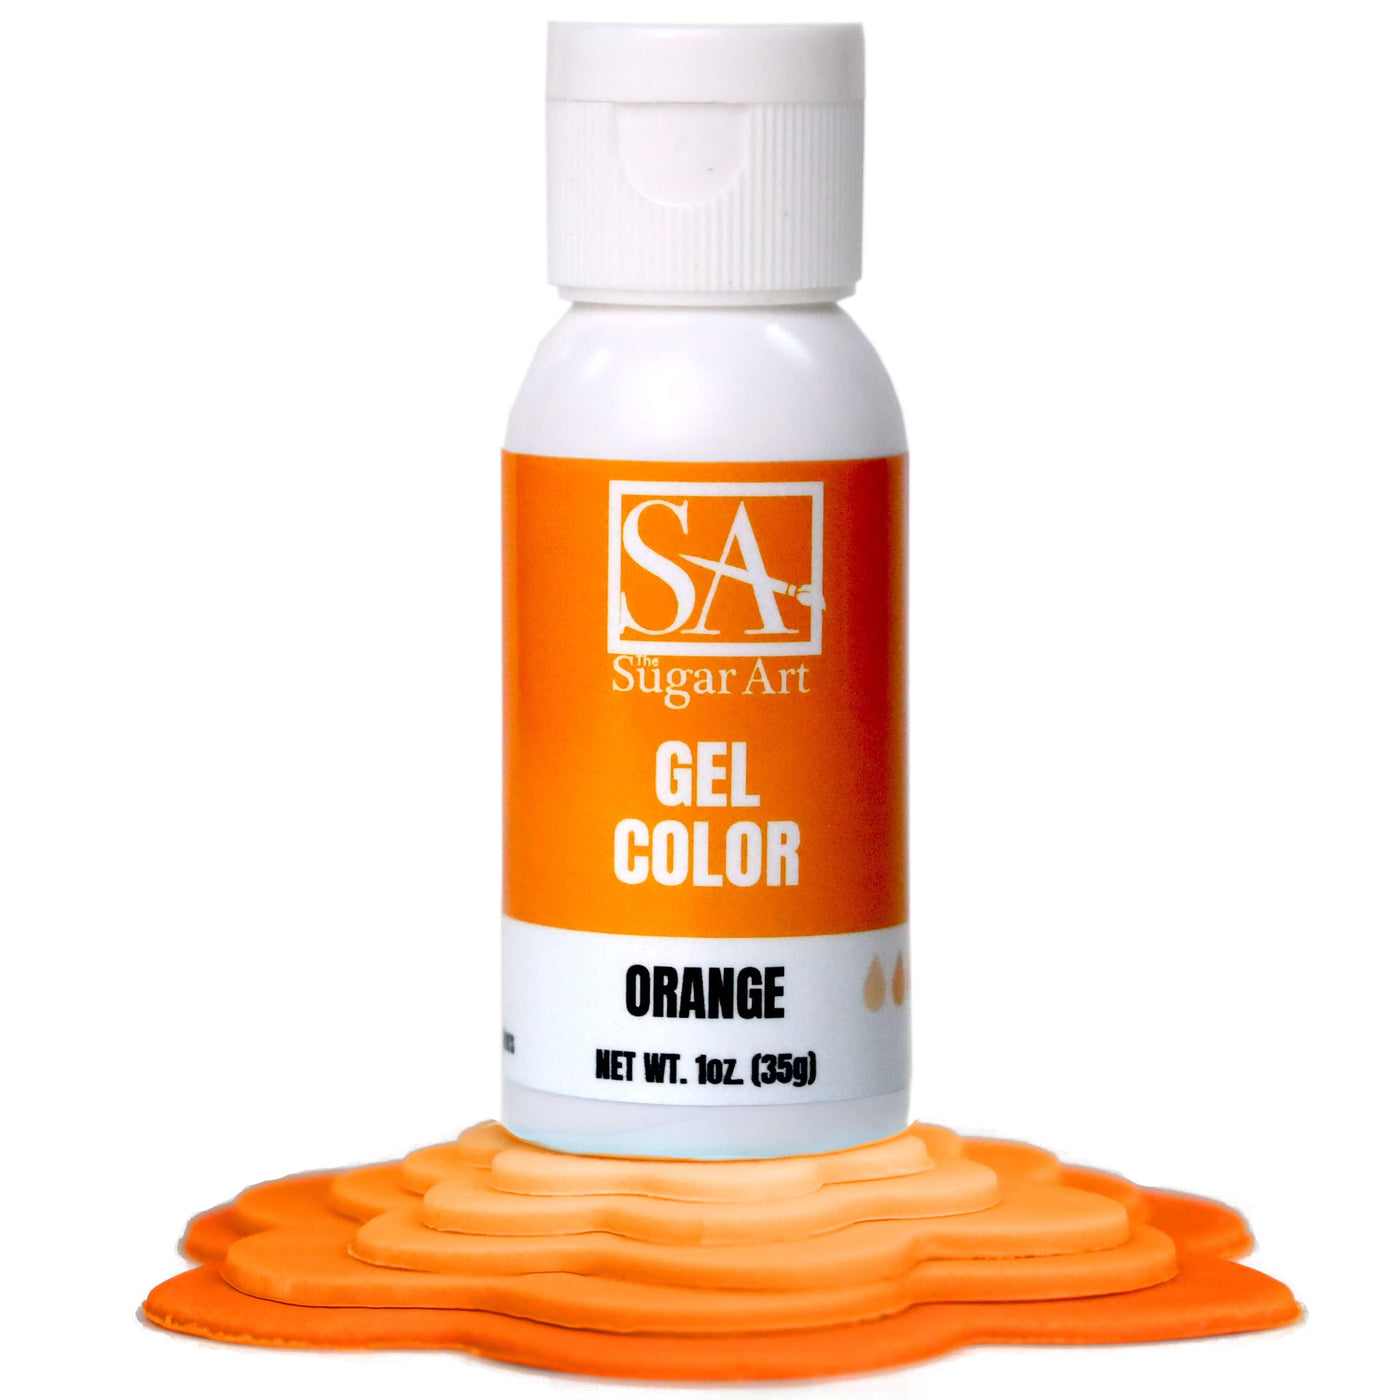 Orange Gel Color - The Sugar Art, Inc.